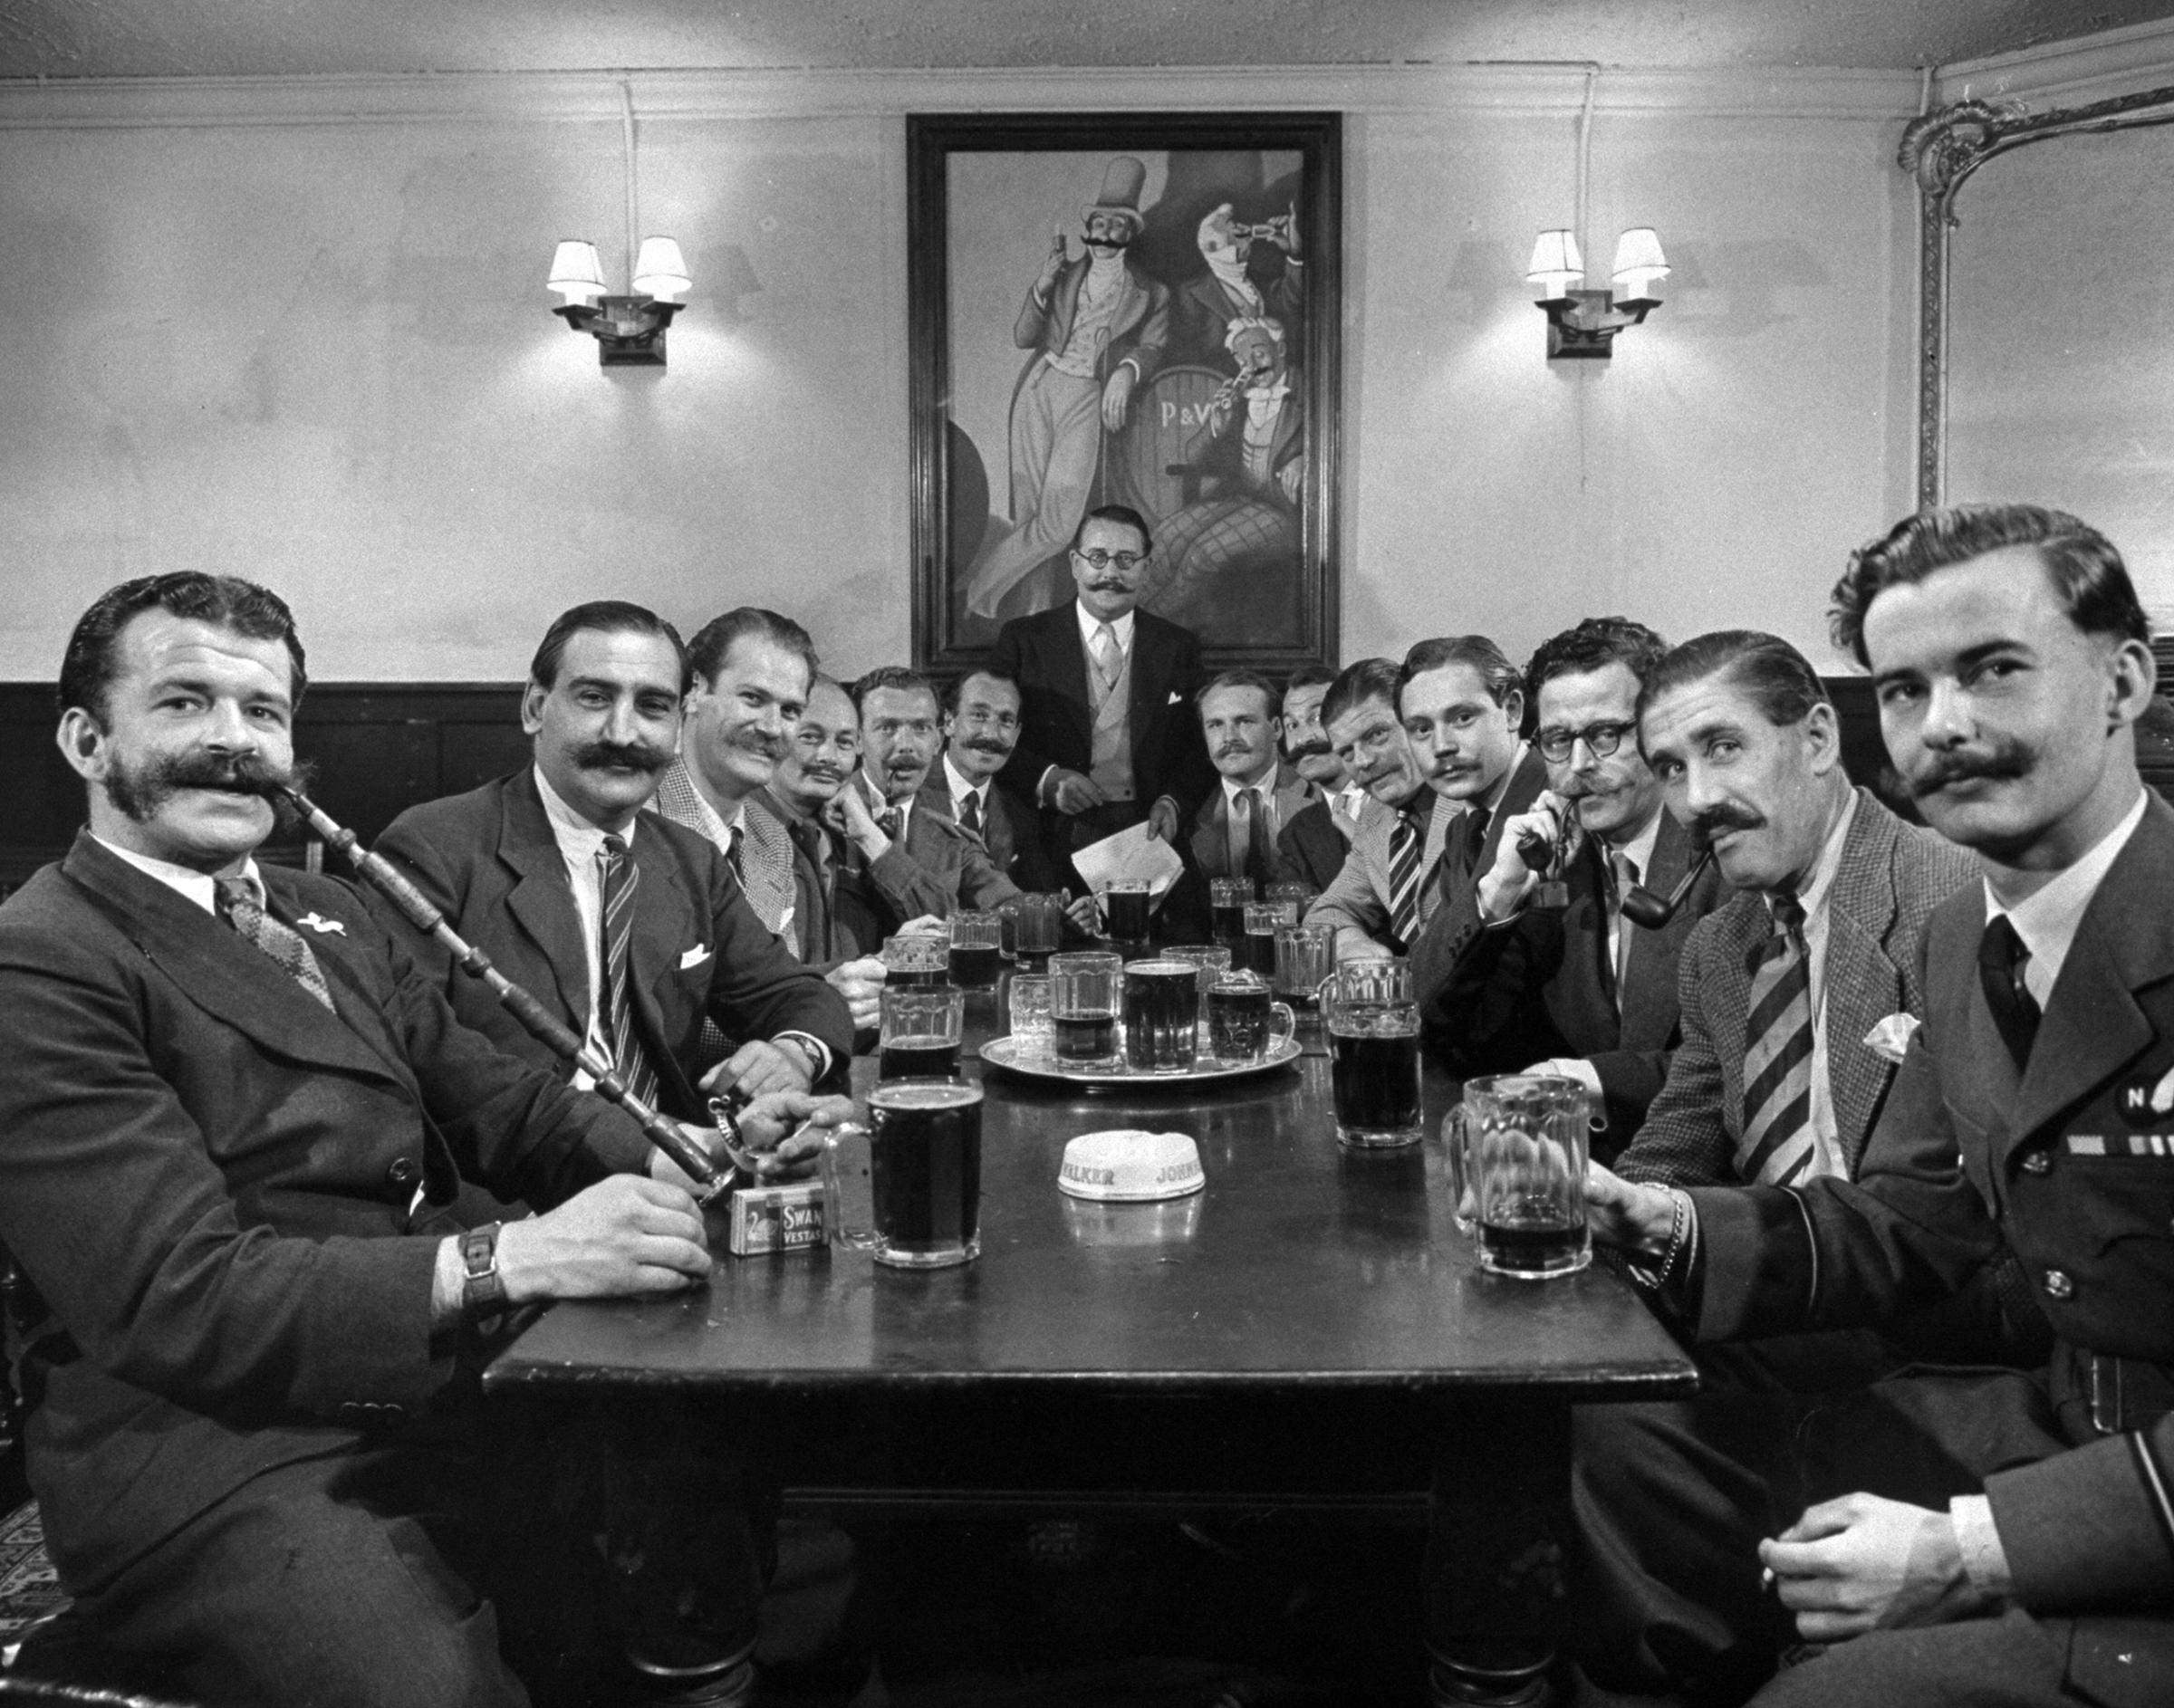 Members of the London Handlebar Club, 1947.